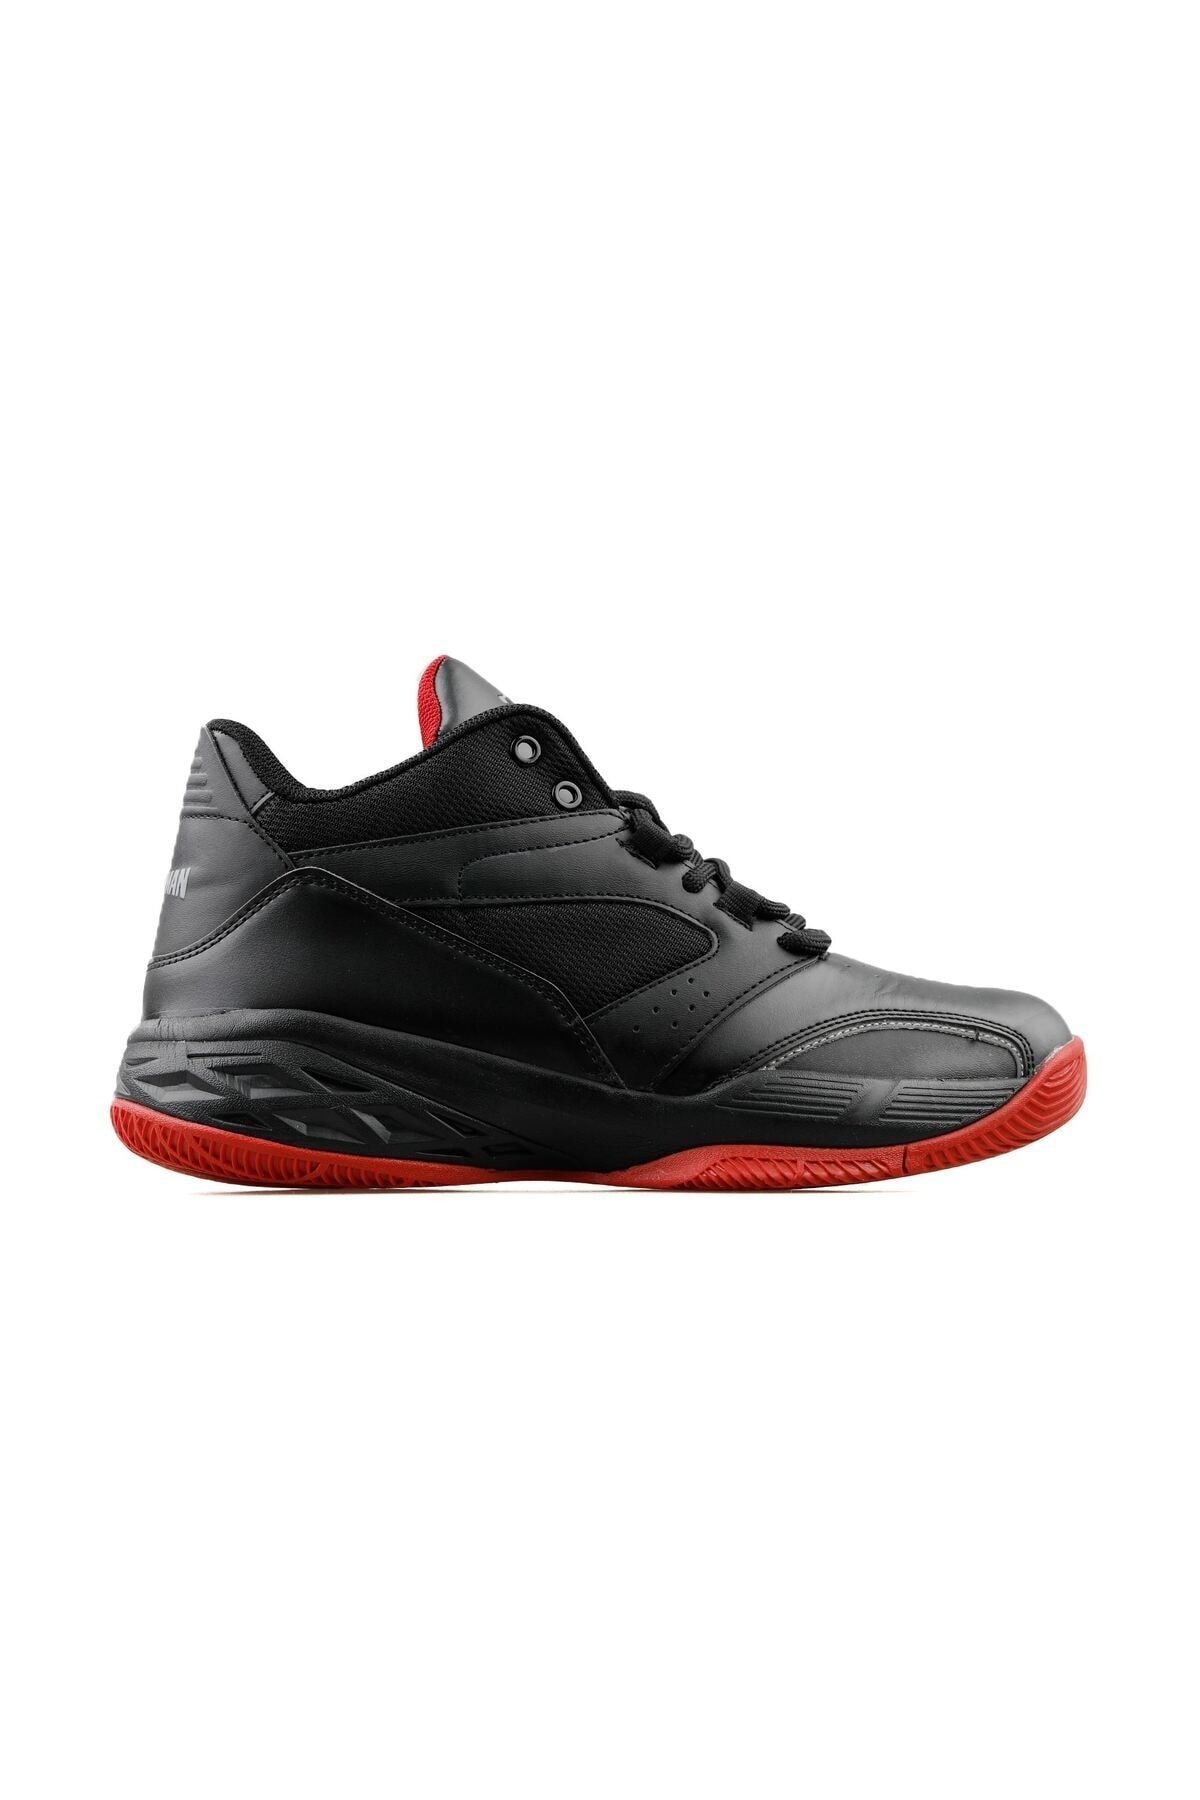 Jump 27722 B Black Red Erkek Basketbol Ayakkabısı 27722-b-black-red Siyah